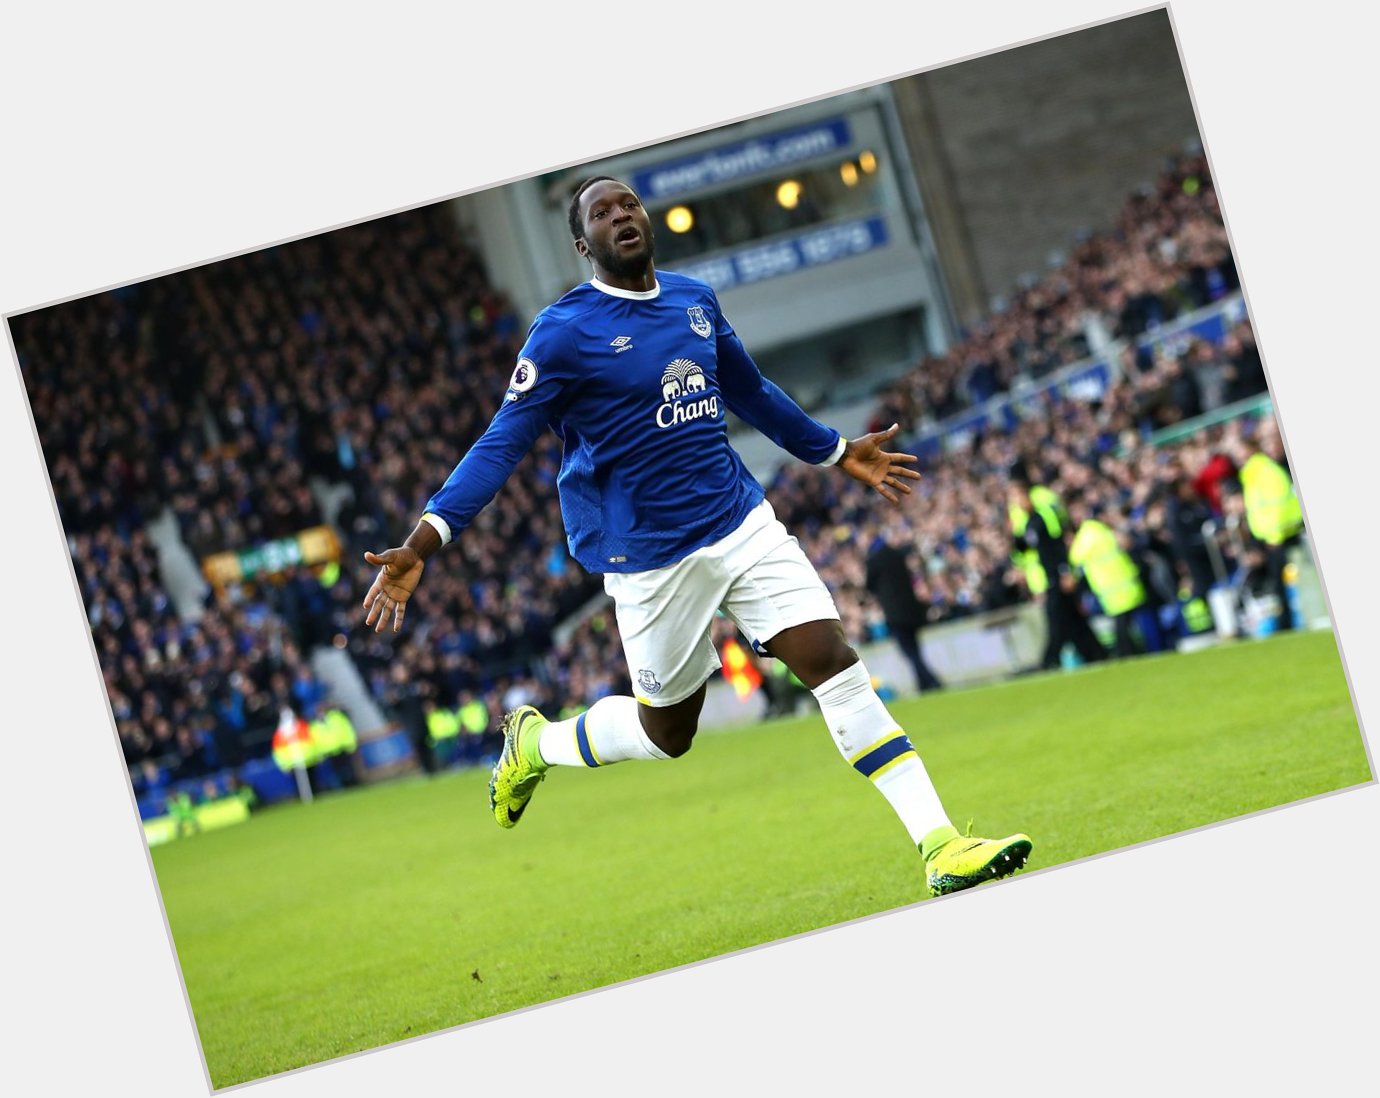 Happy 27th Birthday to former Everton striker Romelu Lukaku.
166 Apps
87 Goals
29 Assists 